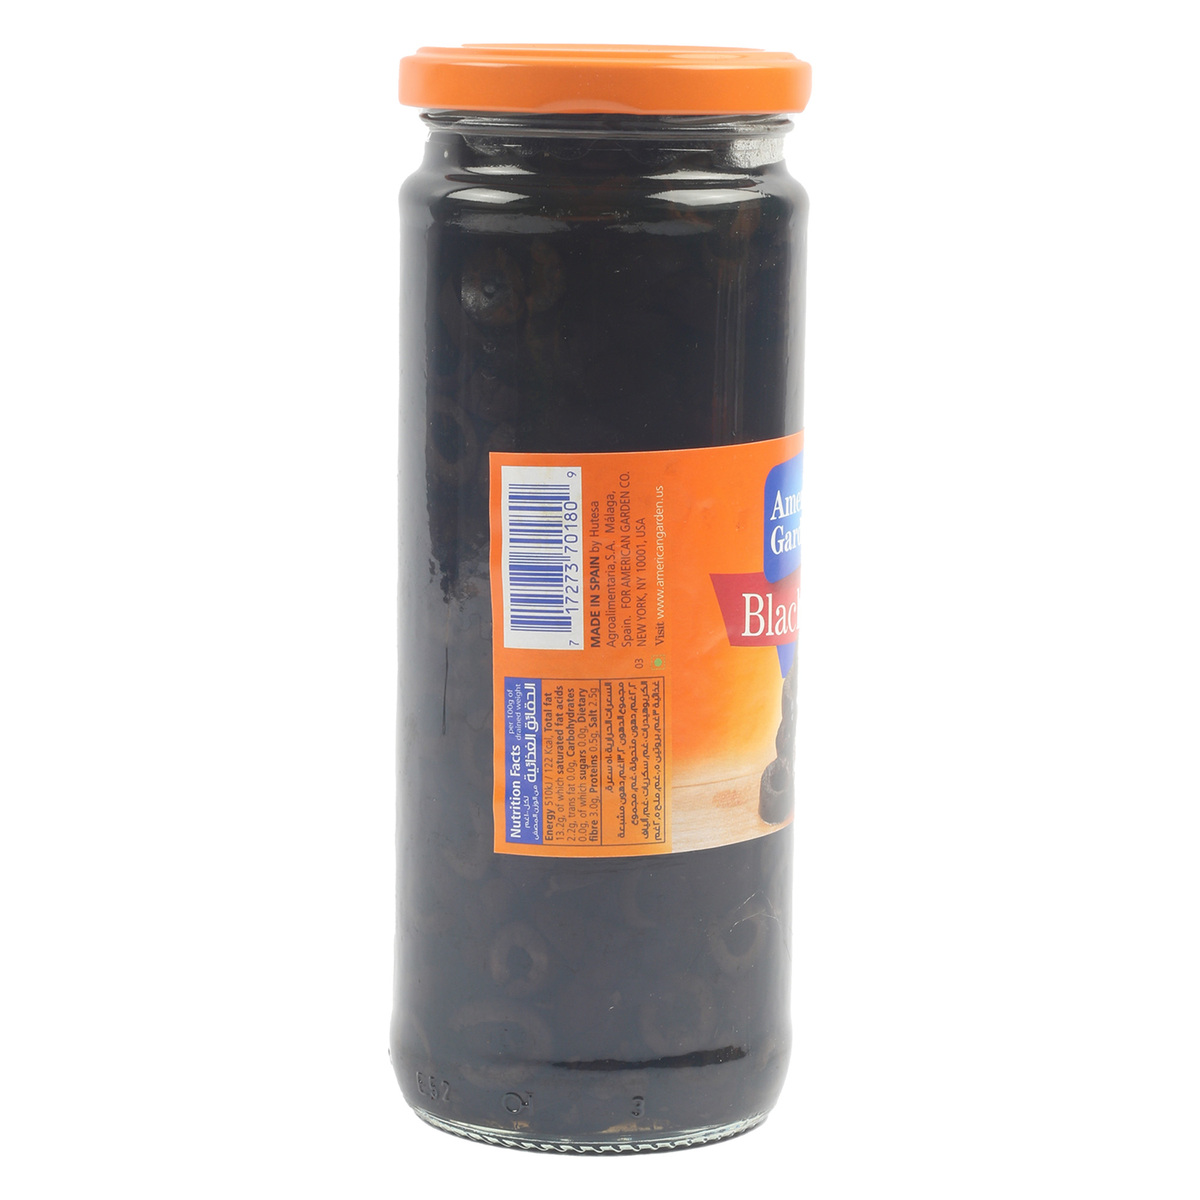 American Garden Sliced Black Olives Value Pack 450 g